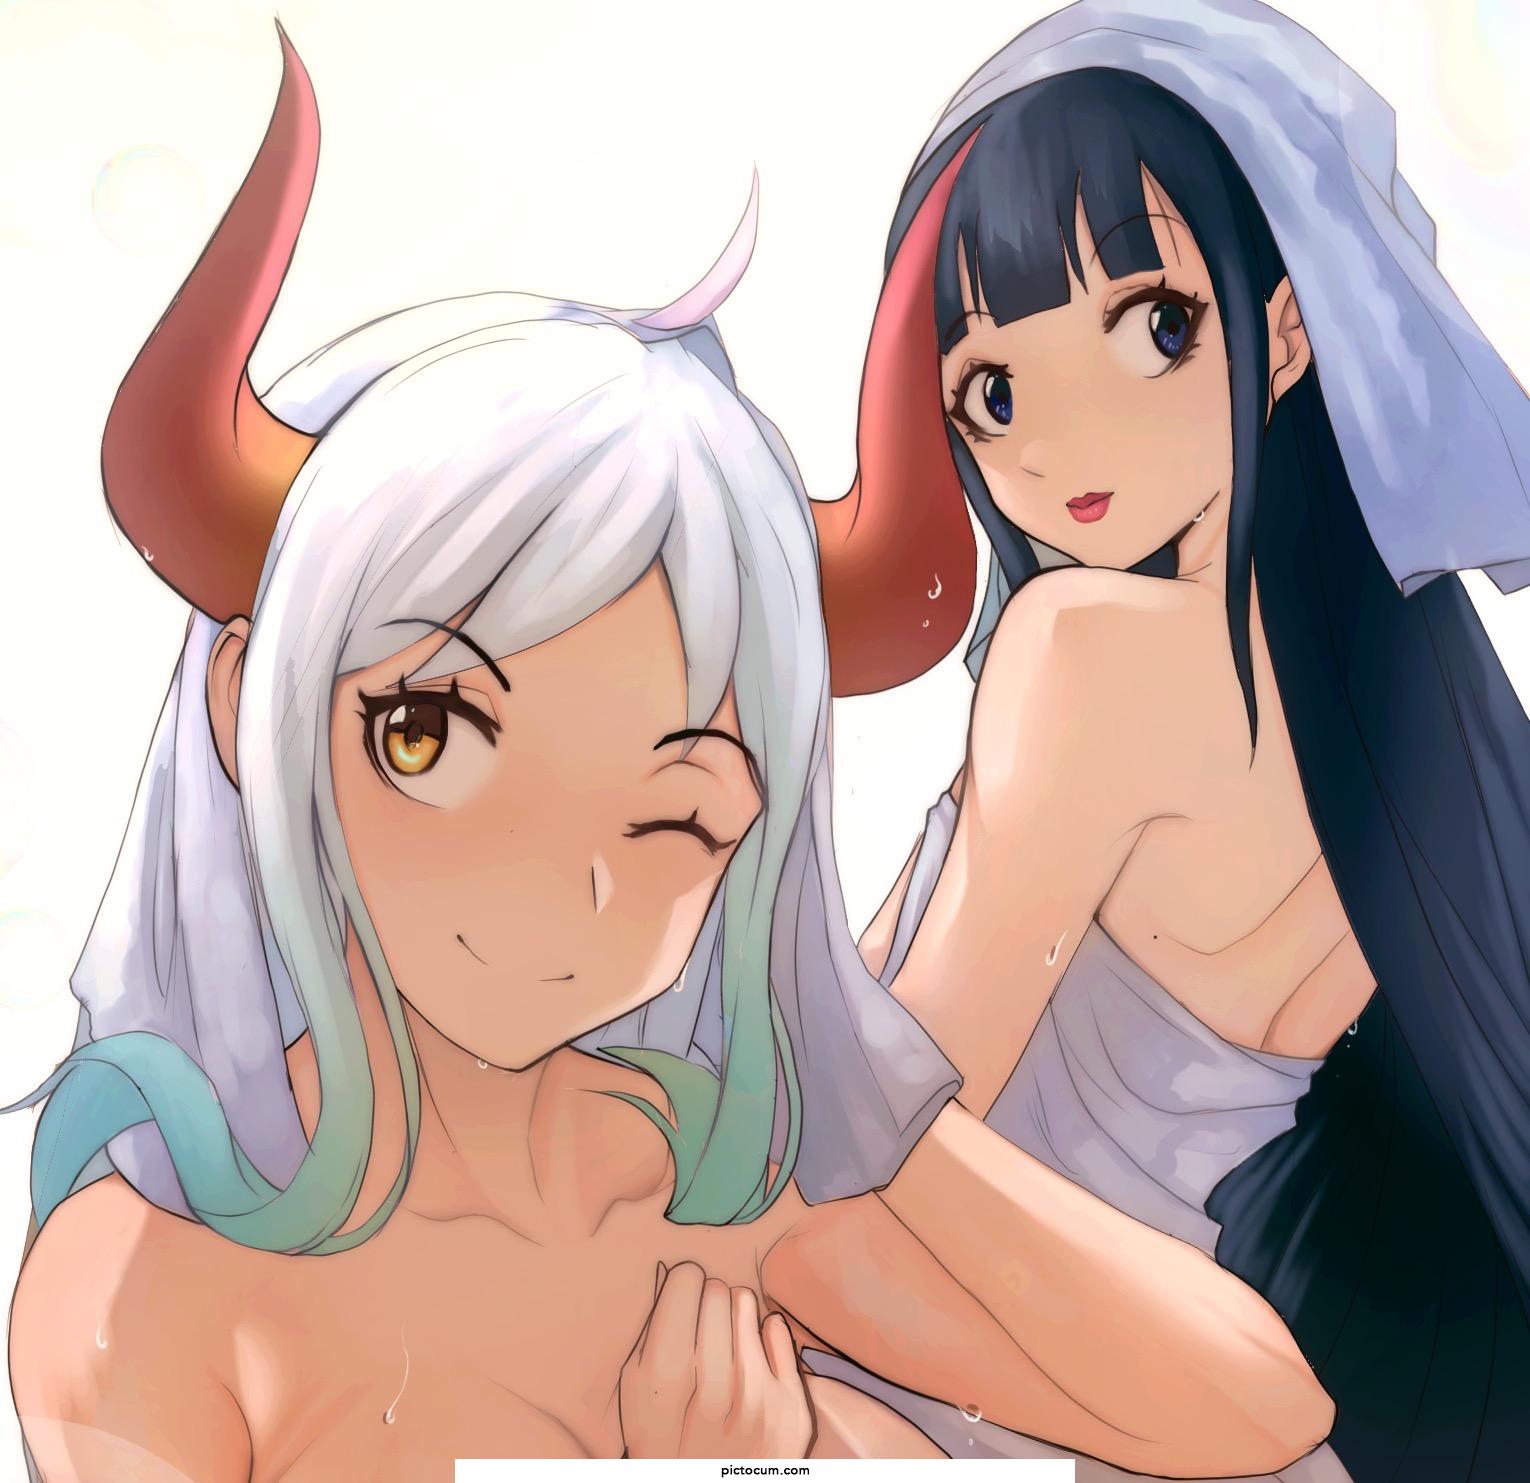 Kiku and Yamato in the bath house